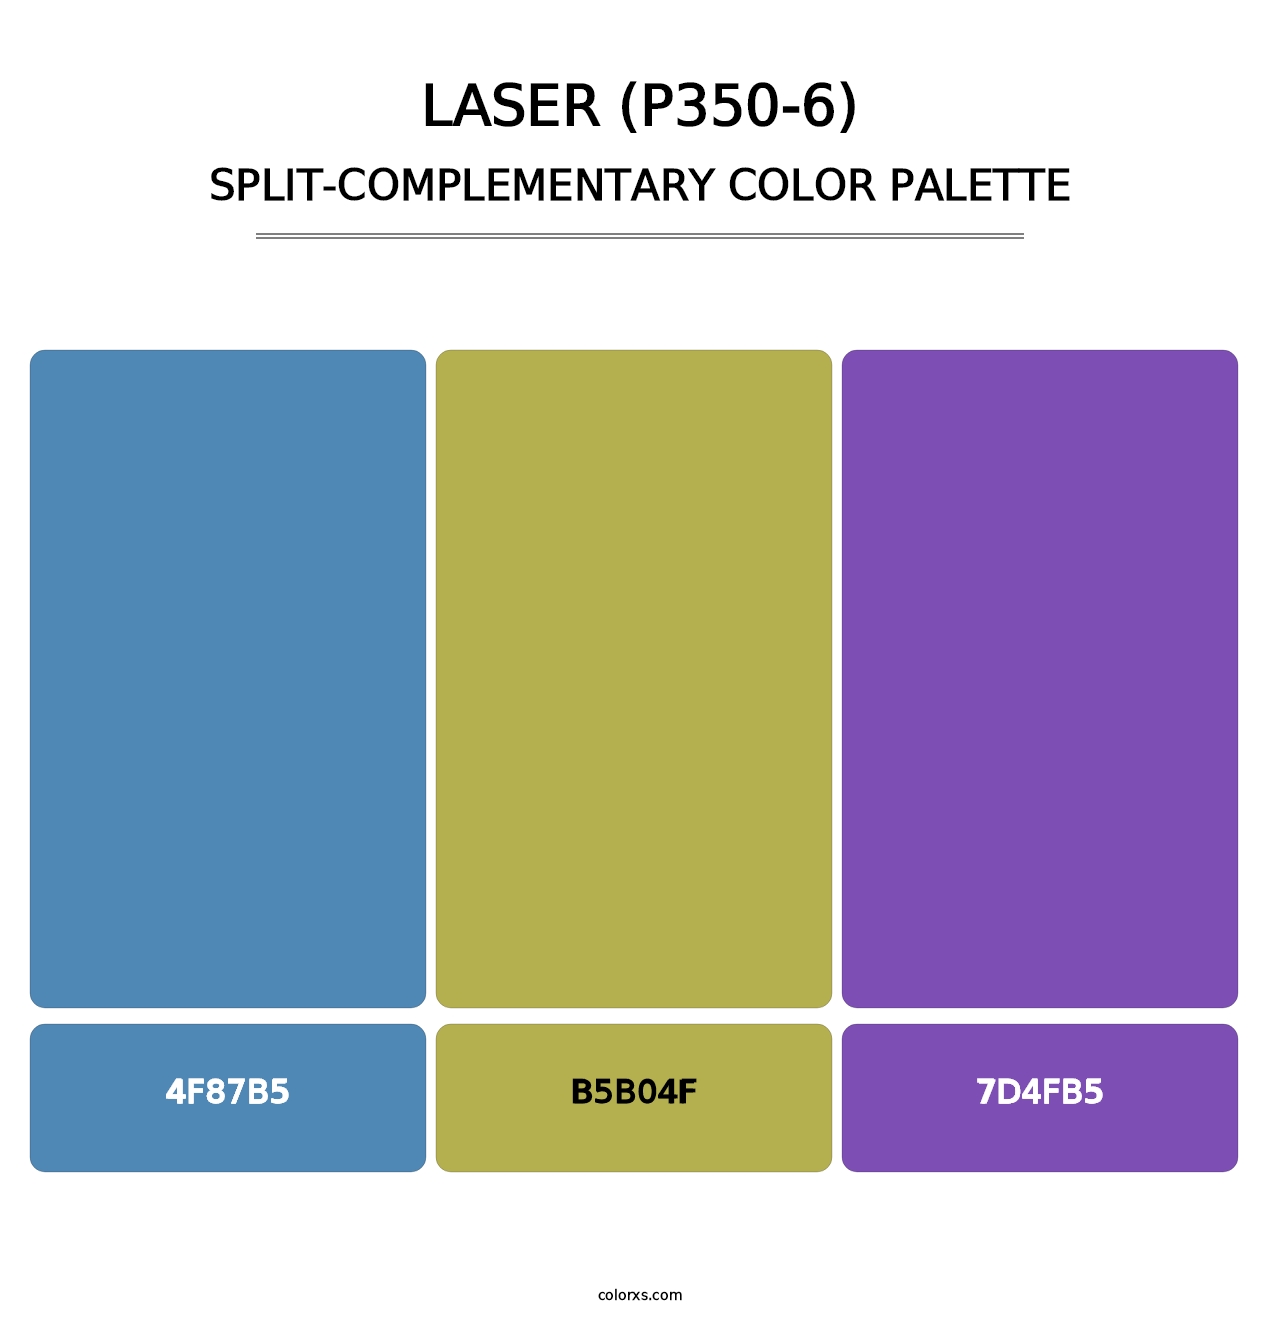 Laser (P350-6) - Split-Complementary Color Palette